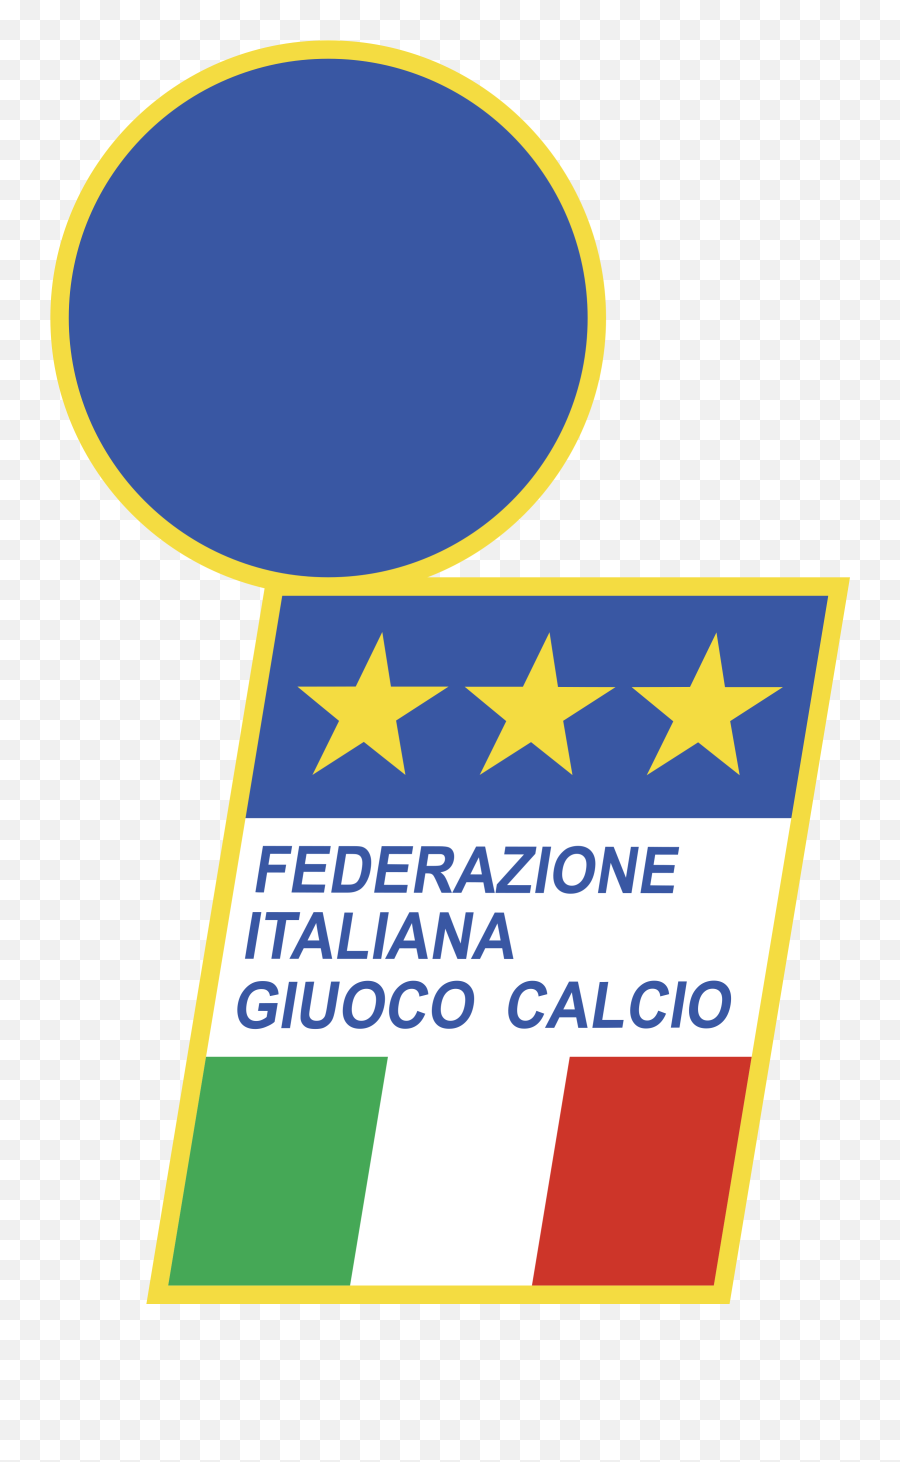 Italy Logo Png Transparent U0026 Svg Vector - Freebie Supply Federazione Italiana Giuoco Calcio,Italy Png